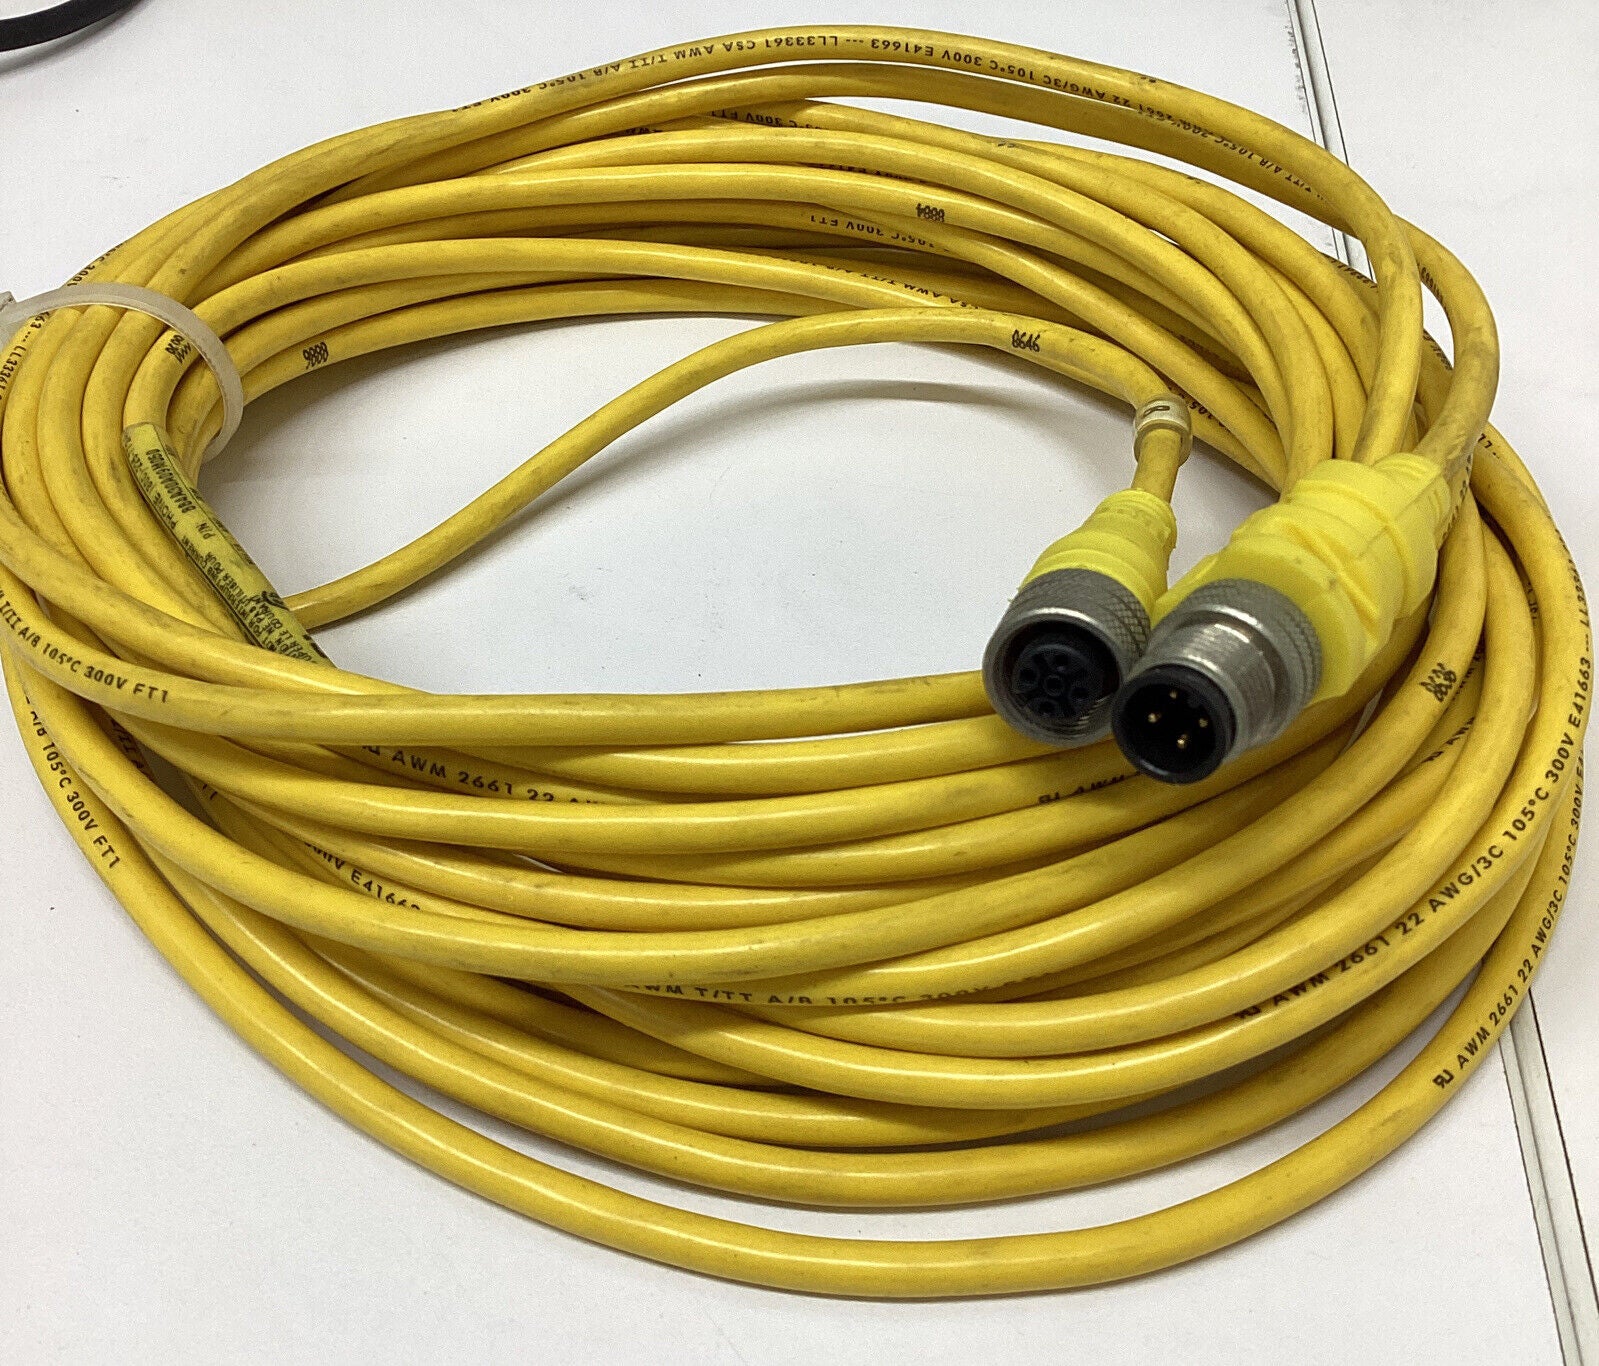 Brad WoodHead 1200680181/884A30A09M050 AP In-line Split Cable (CBL107) - 0